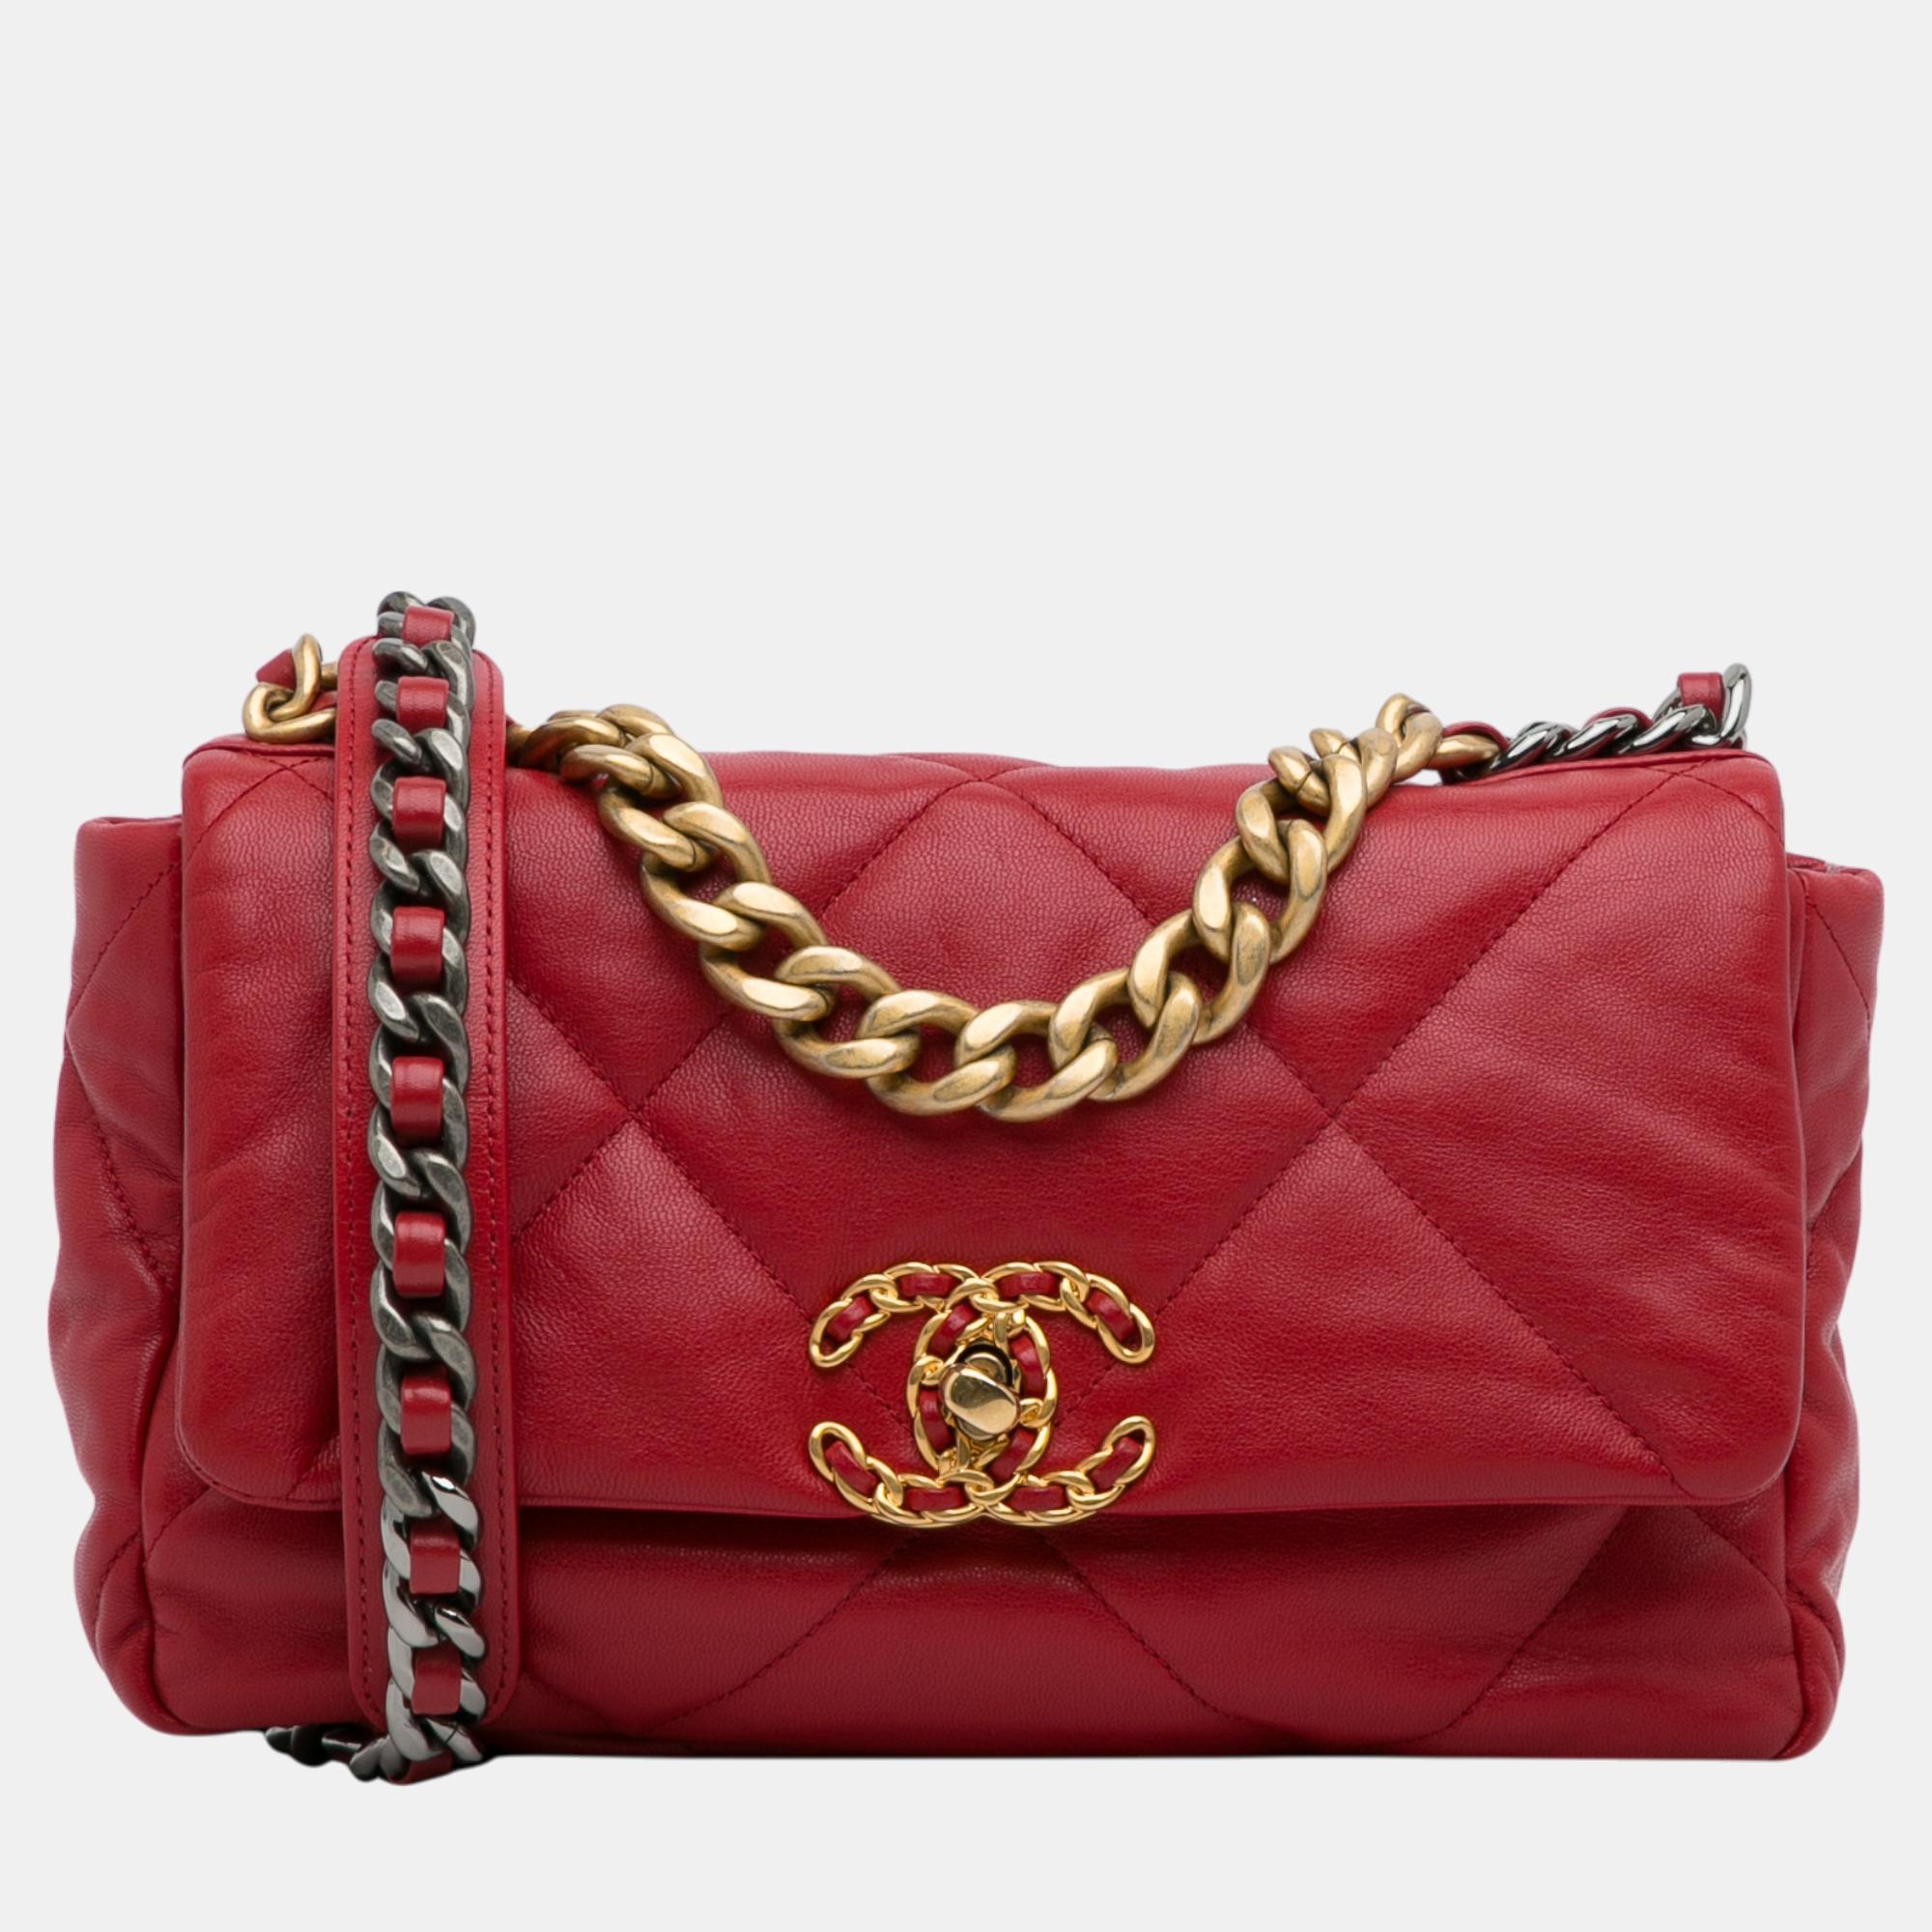 Chanel red medium lambskin 19 flap bag